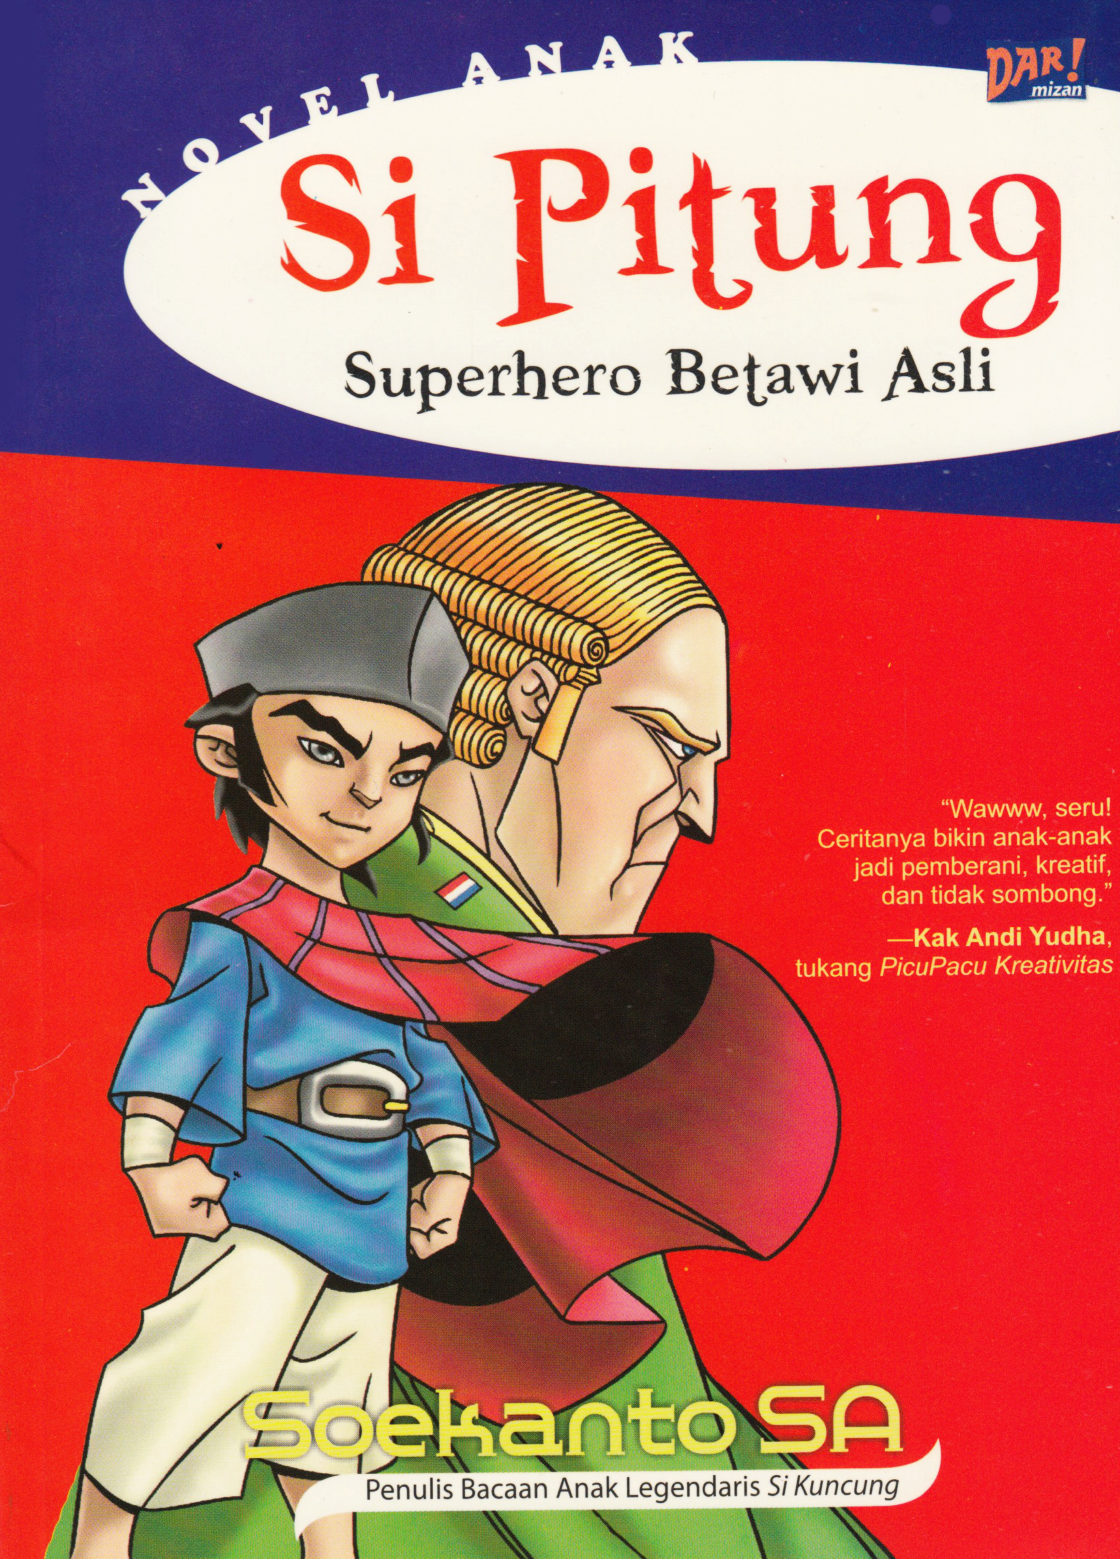 Si Pitung Superhero Betawi Asli (Indonesian)